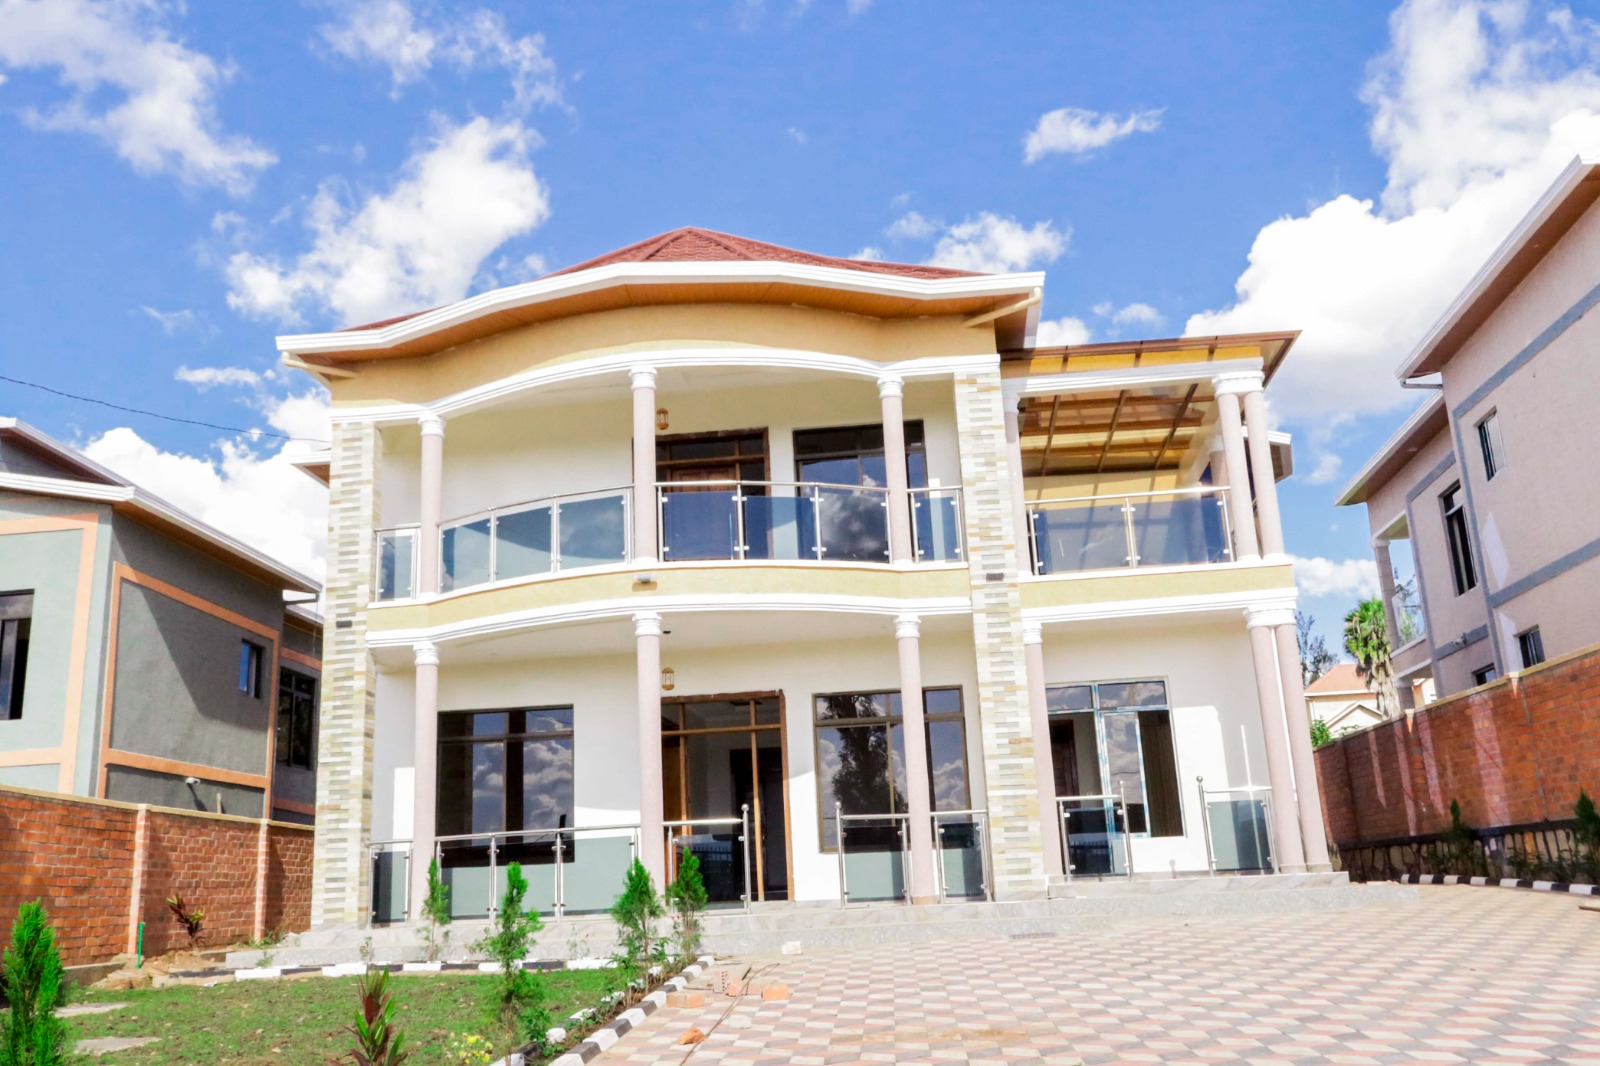 FF 063 Kibagabaga New and nice house for sale with good view in Kigali Rwanda